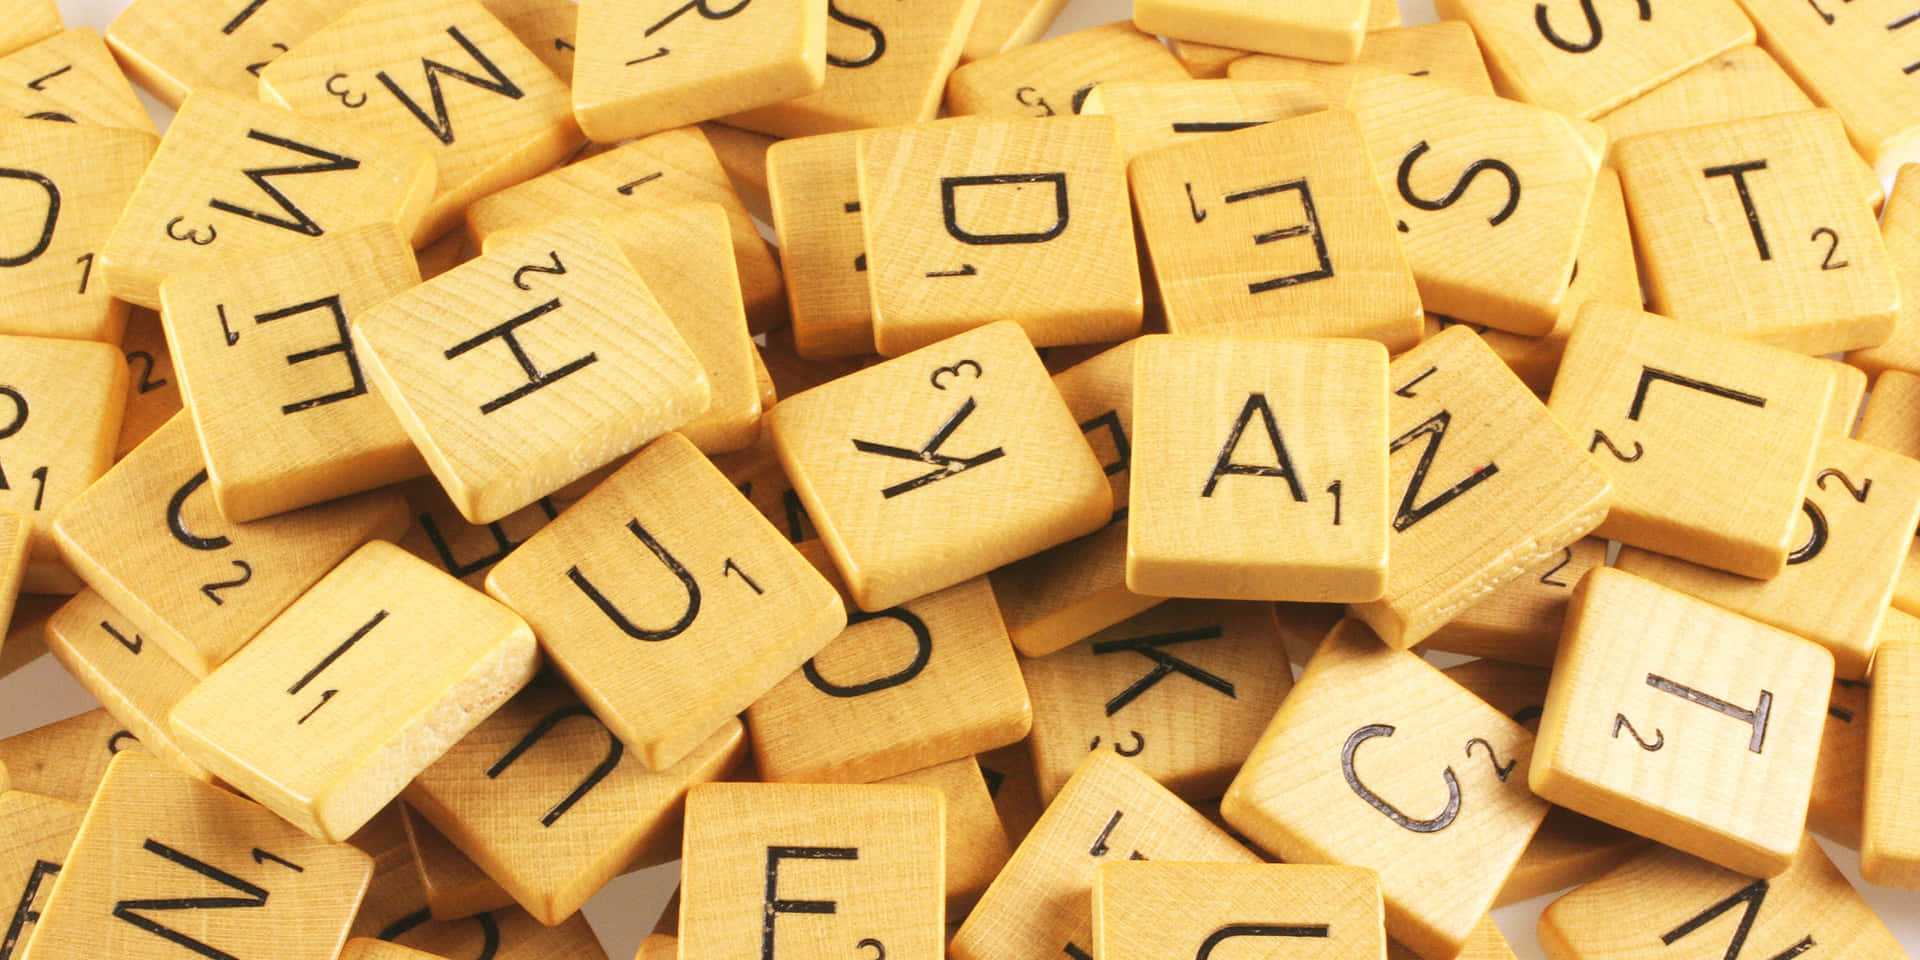 Scrabble Letters On Wooden Tiles